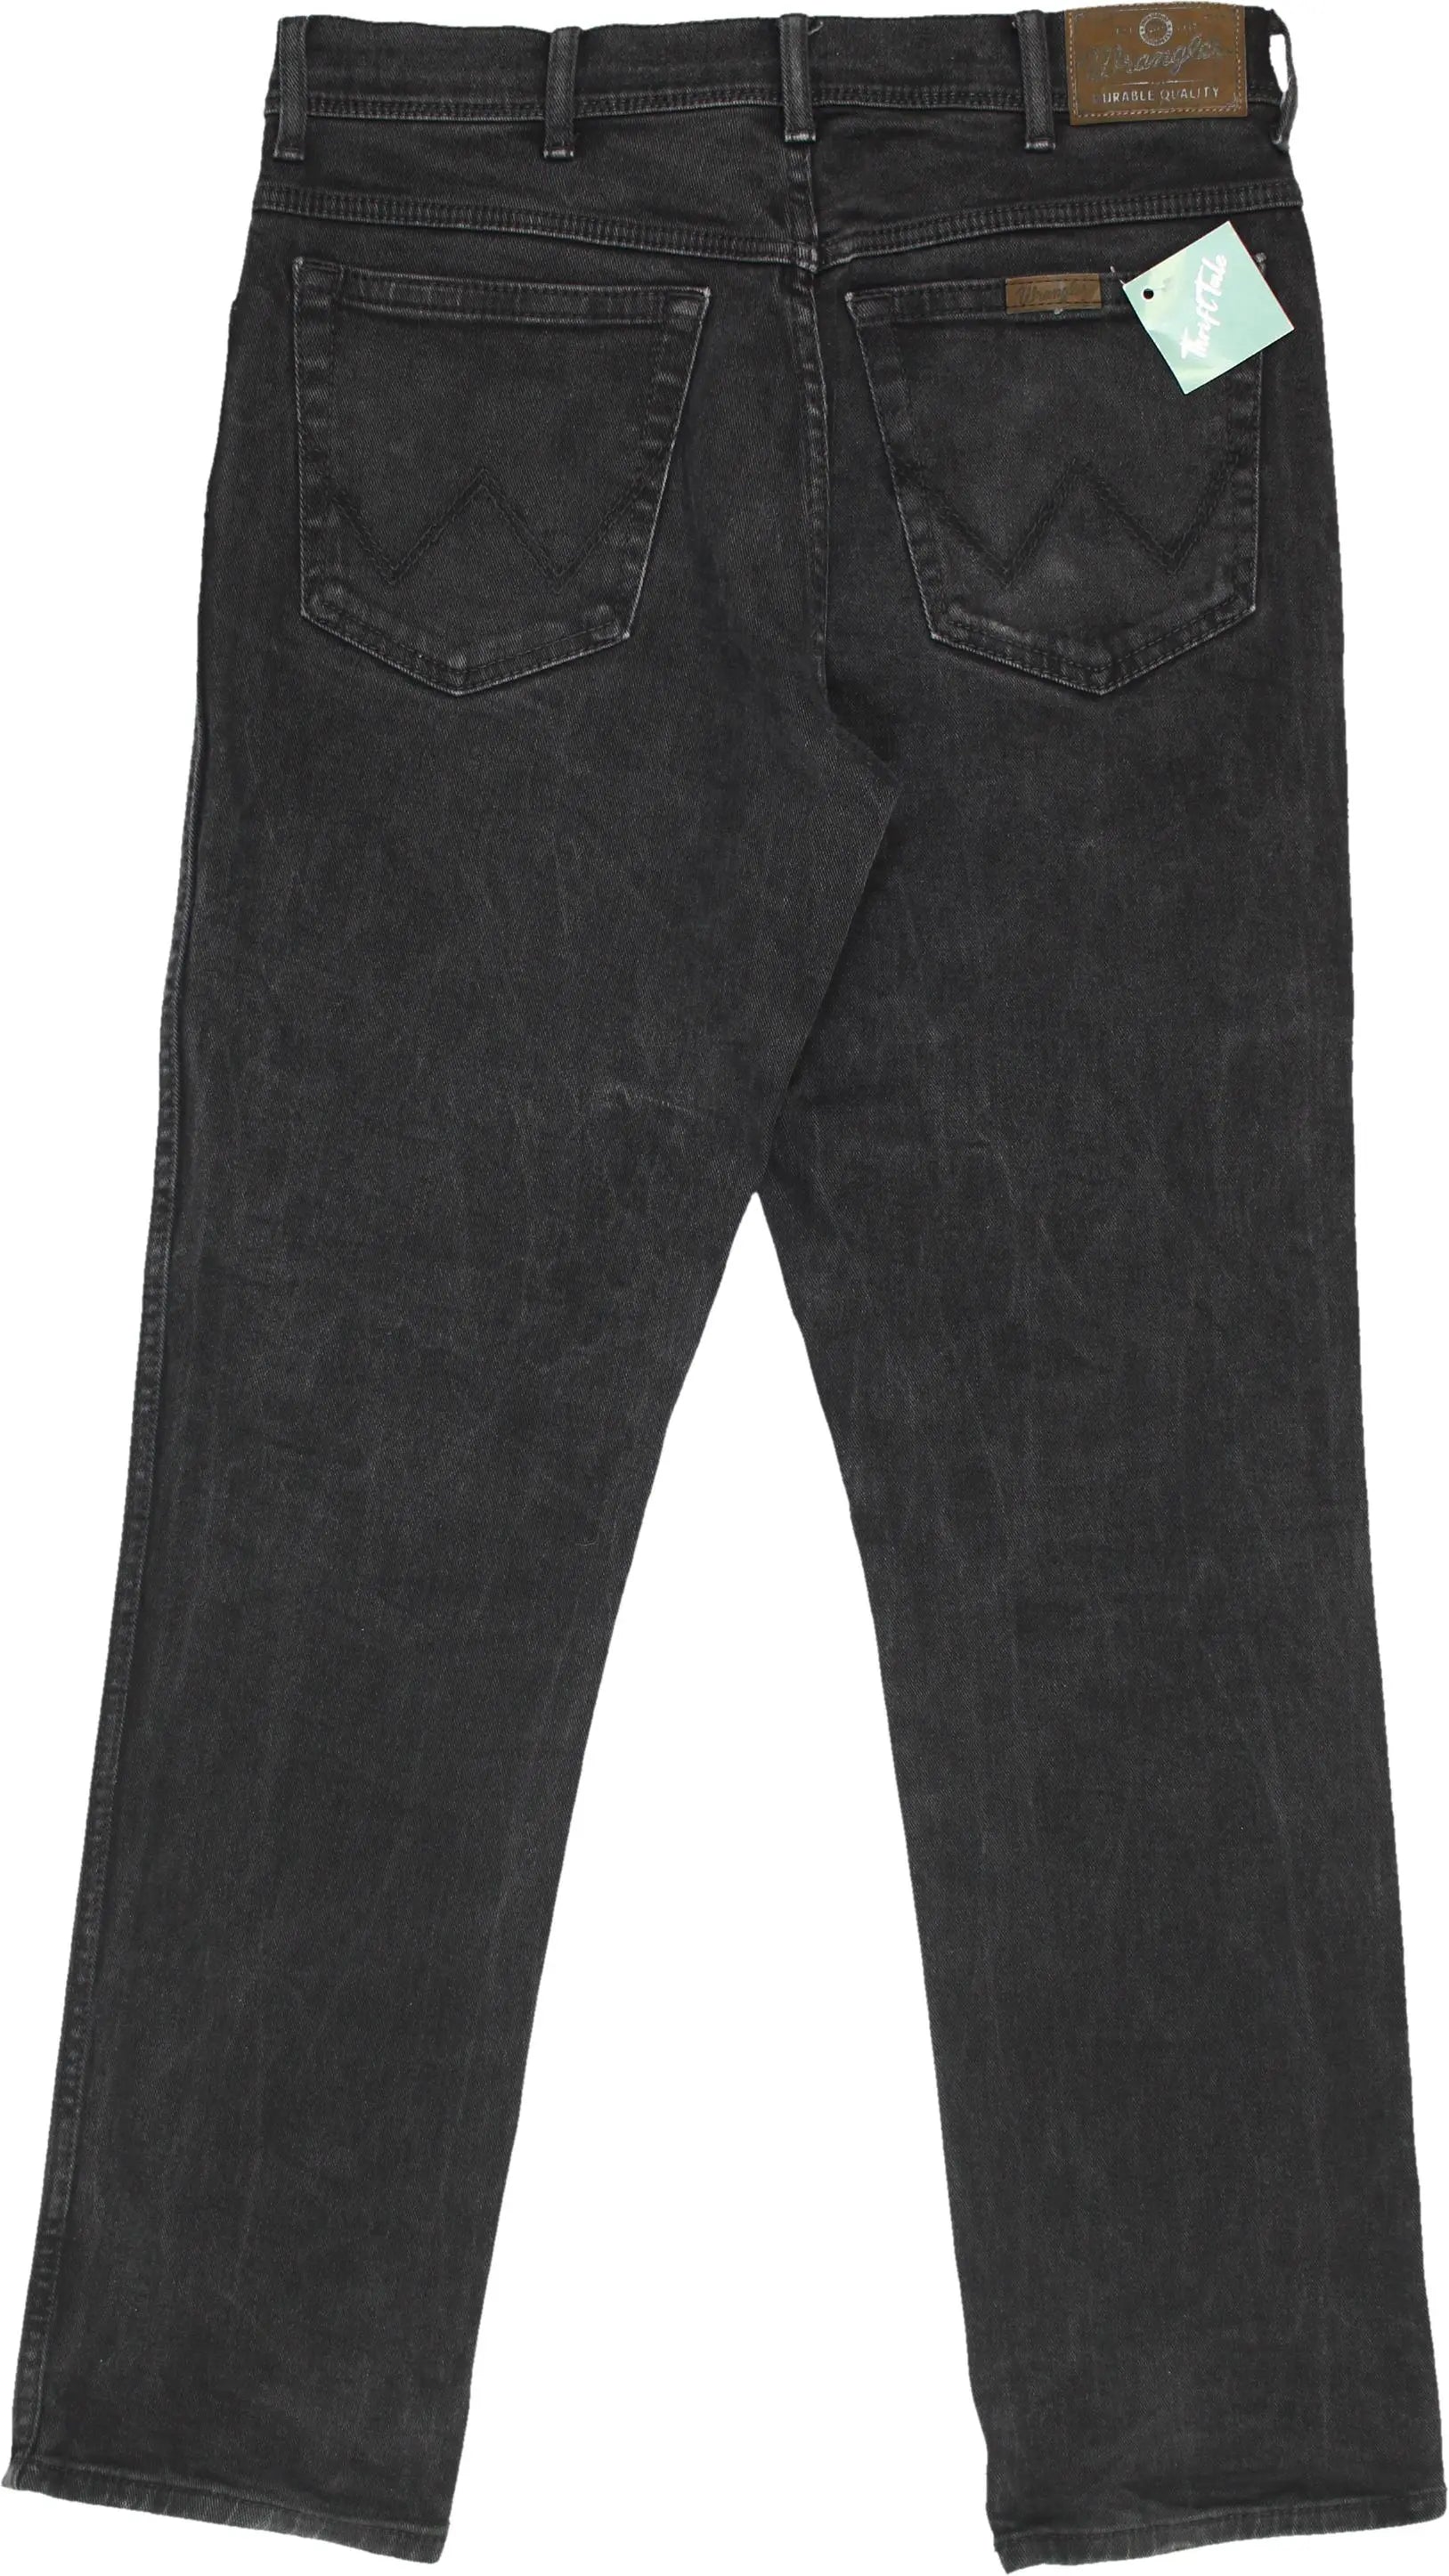 Wrangler - Regular Jeans by Wrangler- ThriftTale.com - Vintage and second handclothing